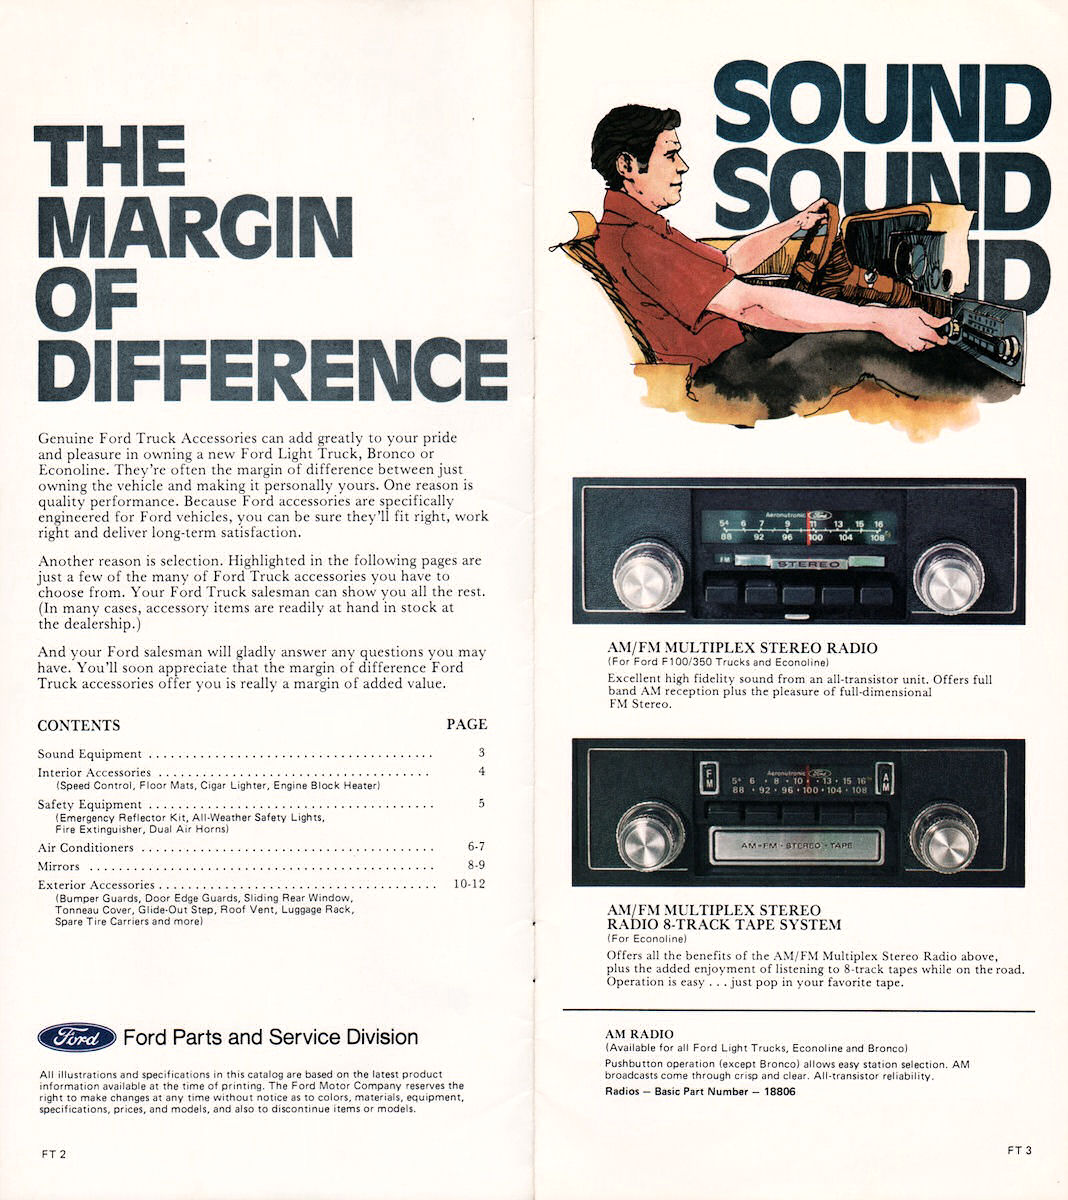 n_1977 Ford Truck Accessories-02-03.jpg